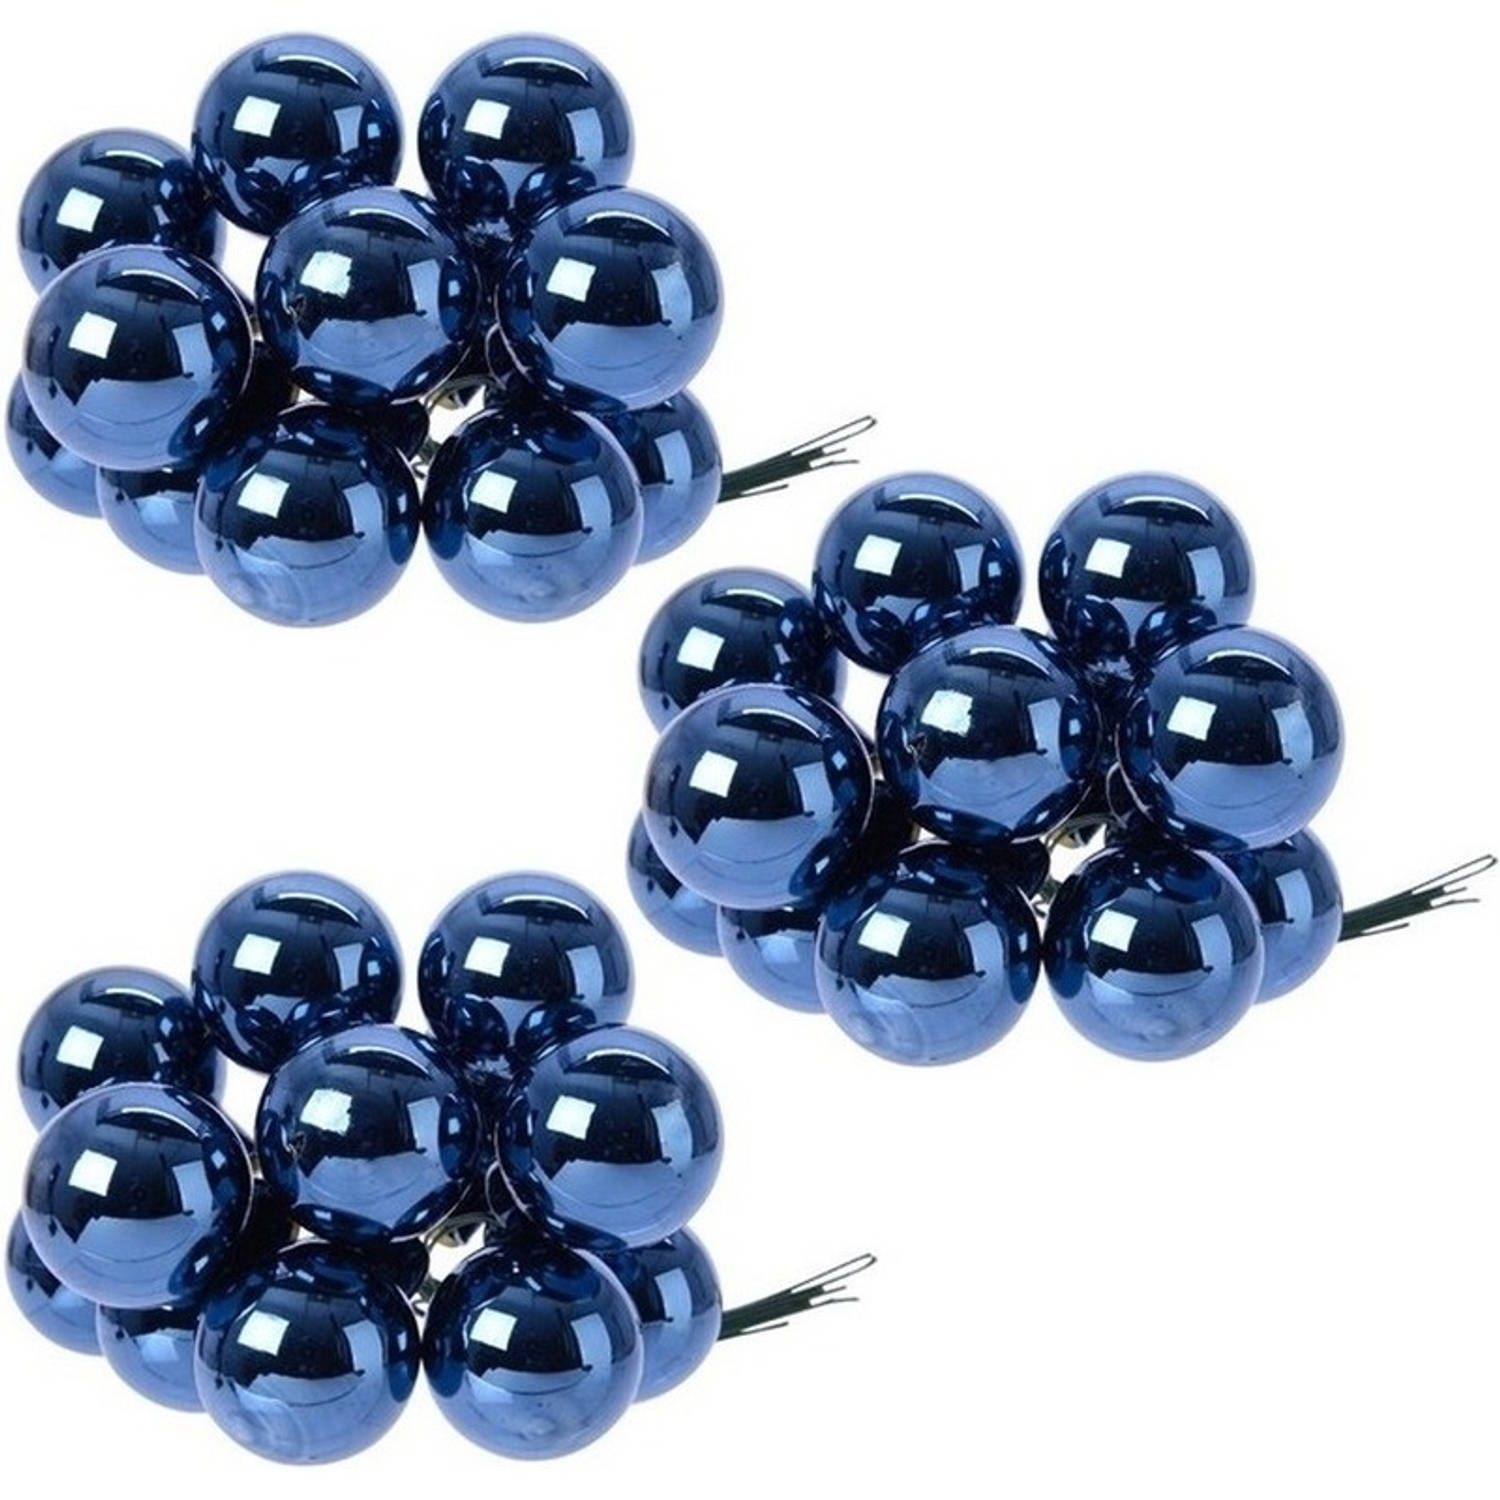 30x Donkerblauwe Mini Kerststukjes Insteek Kerstballetjes 2 Cm Van Glas Kerststukjes